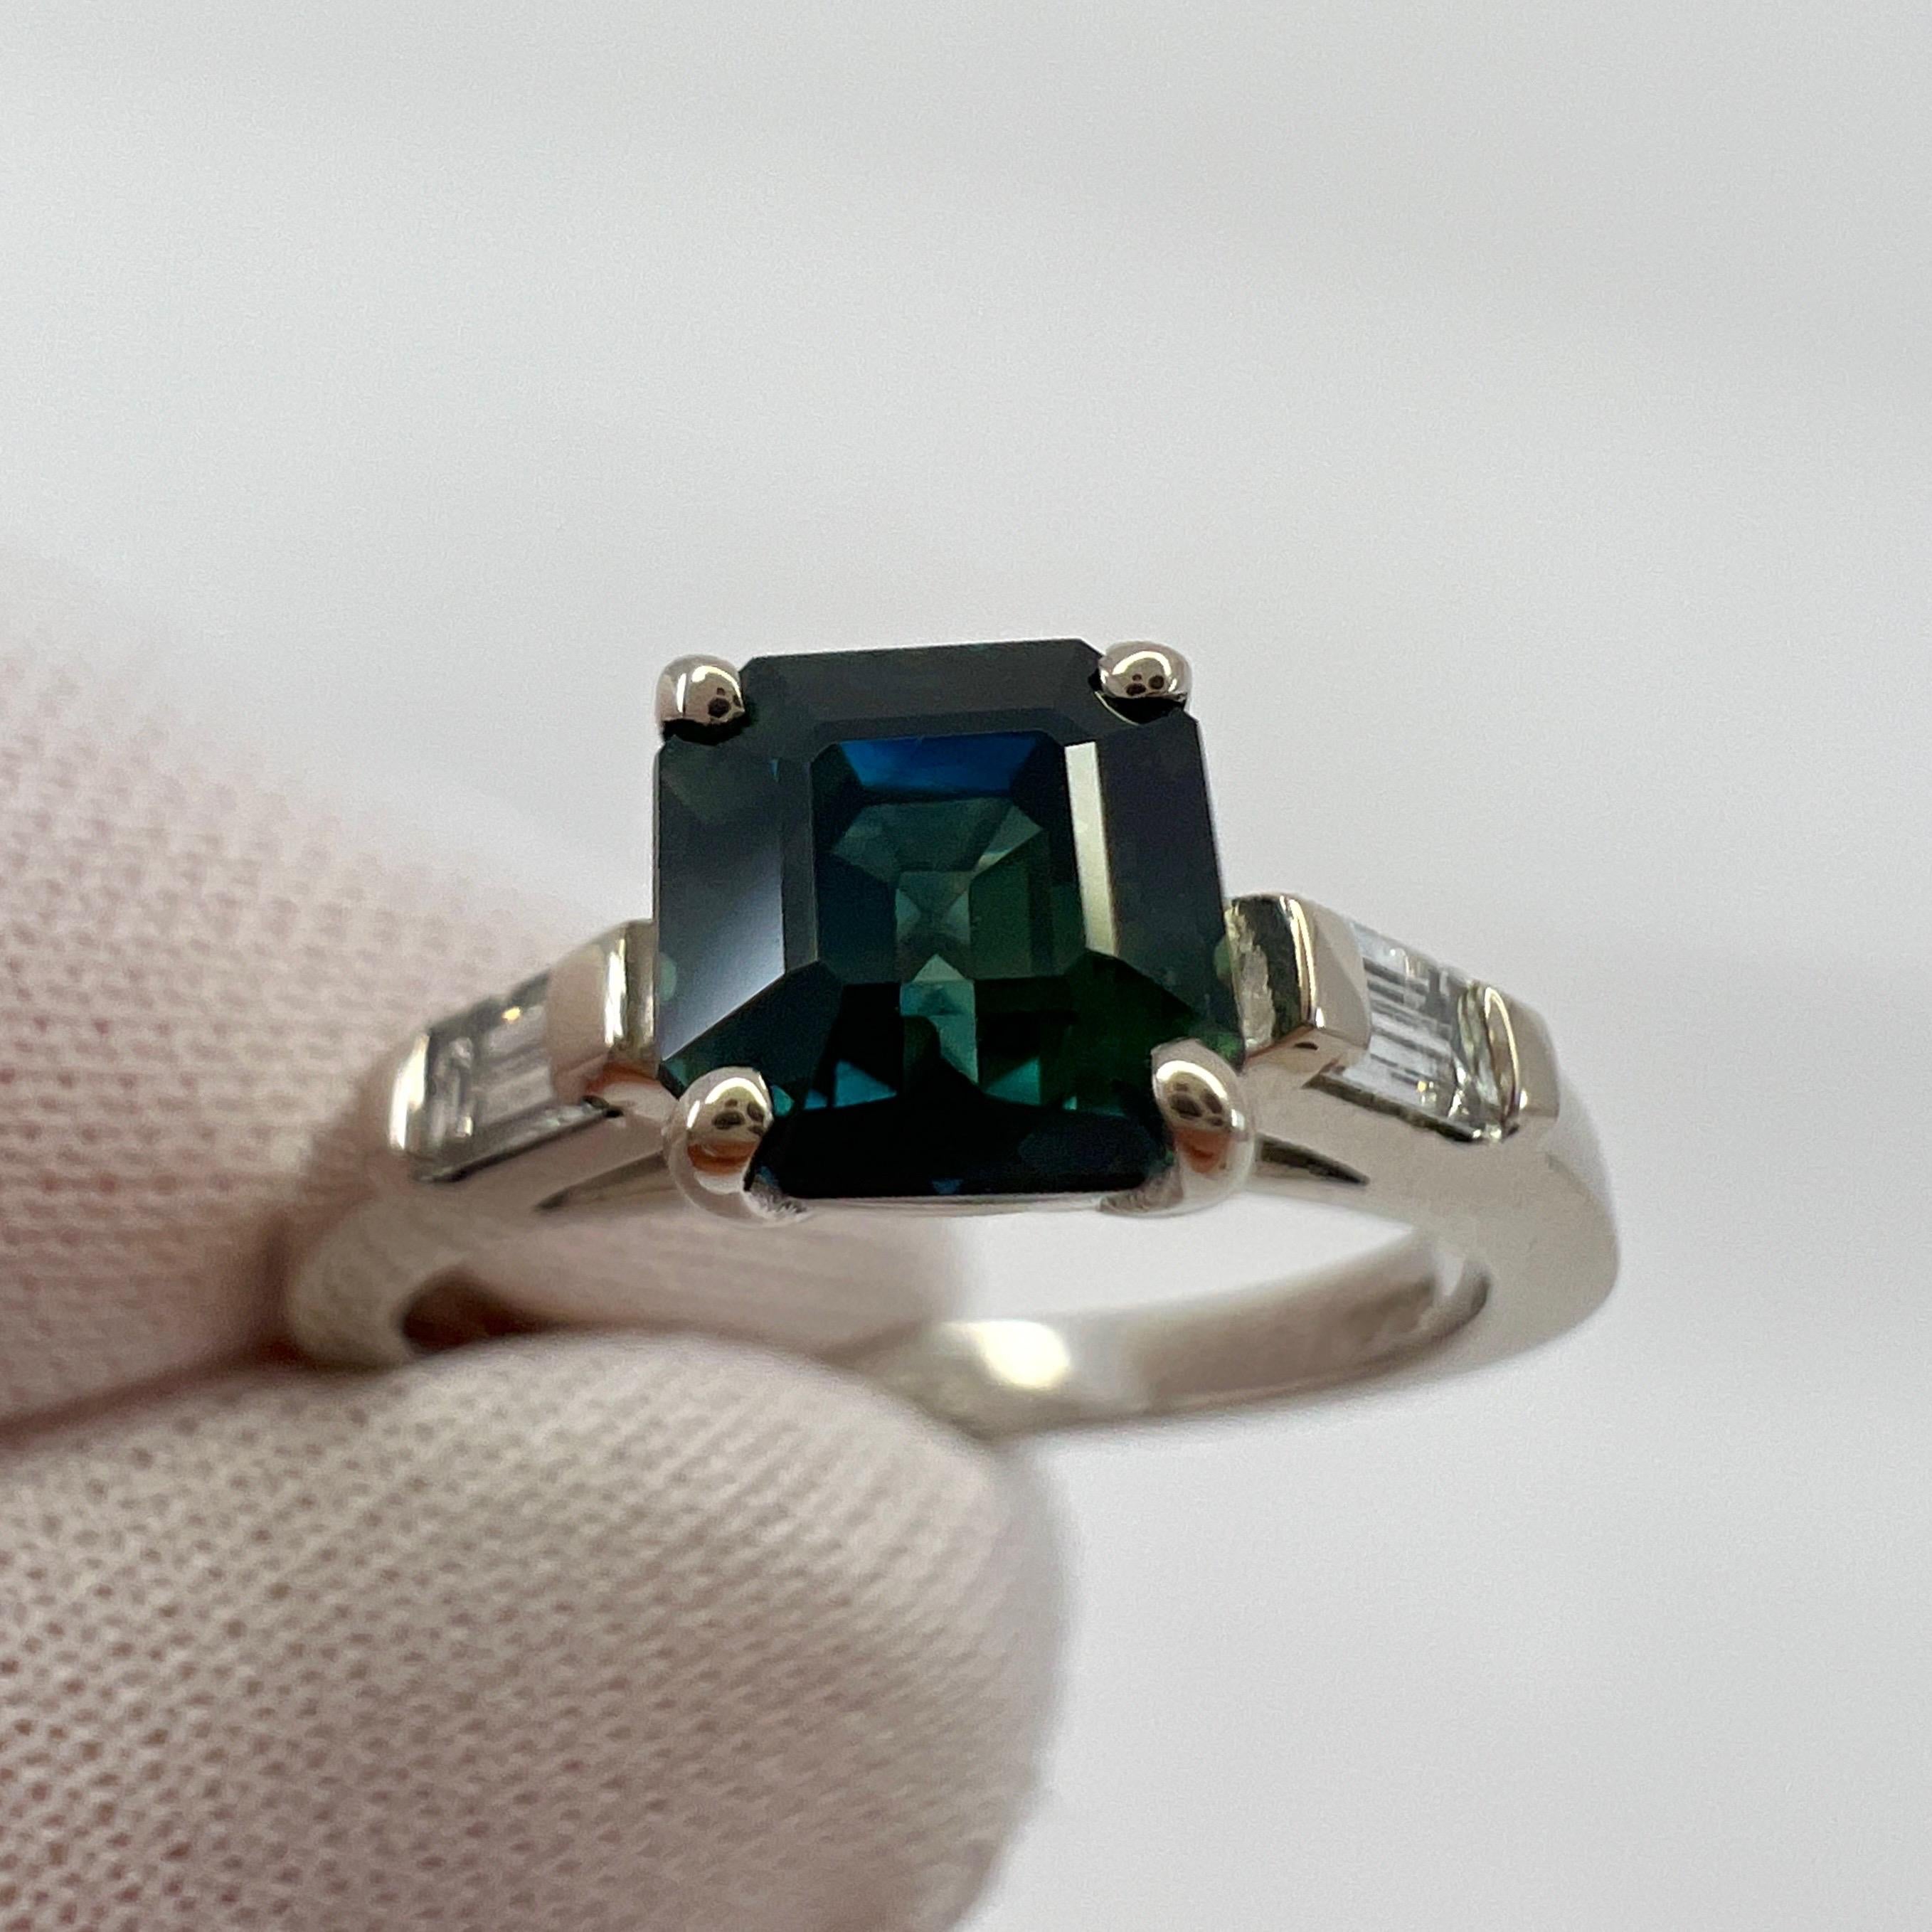 GIA Certified Deep Blue Untreated Australian Sapphire & Diamond 18k White Gold Three Stone Ring.

Rare GIA Certified 1.31 Carat Australian sapphire with a stunning deep blue colour. Slight greenish undertones and a square octagonal/Asscher style